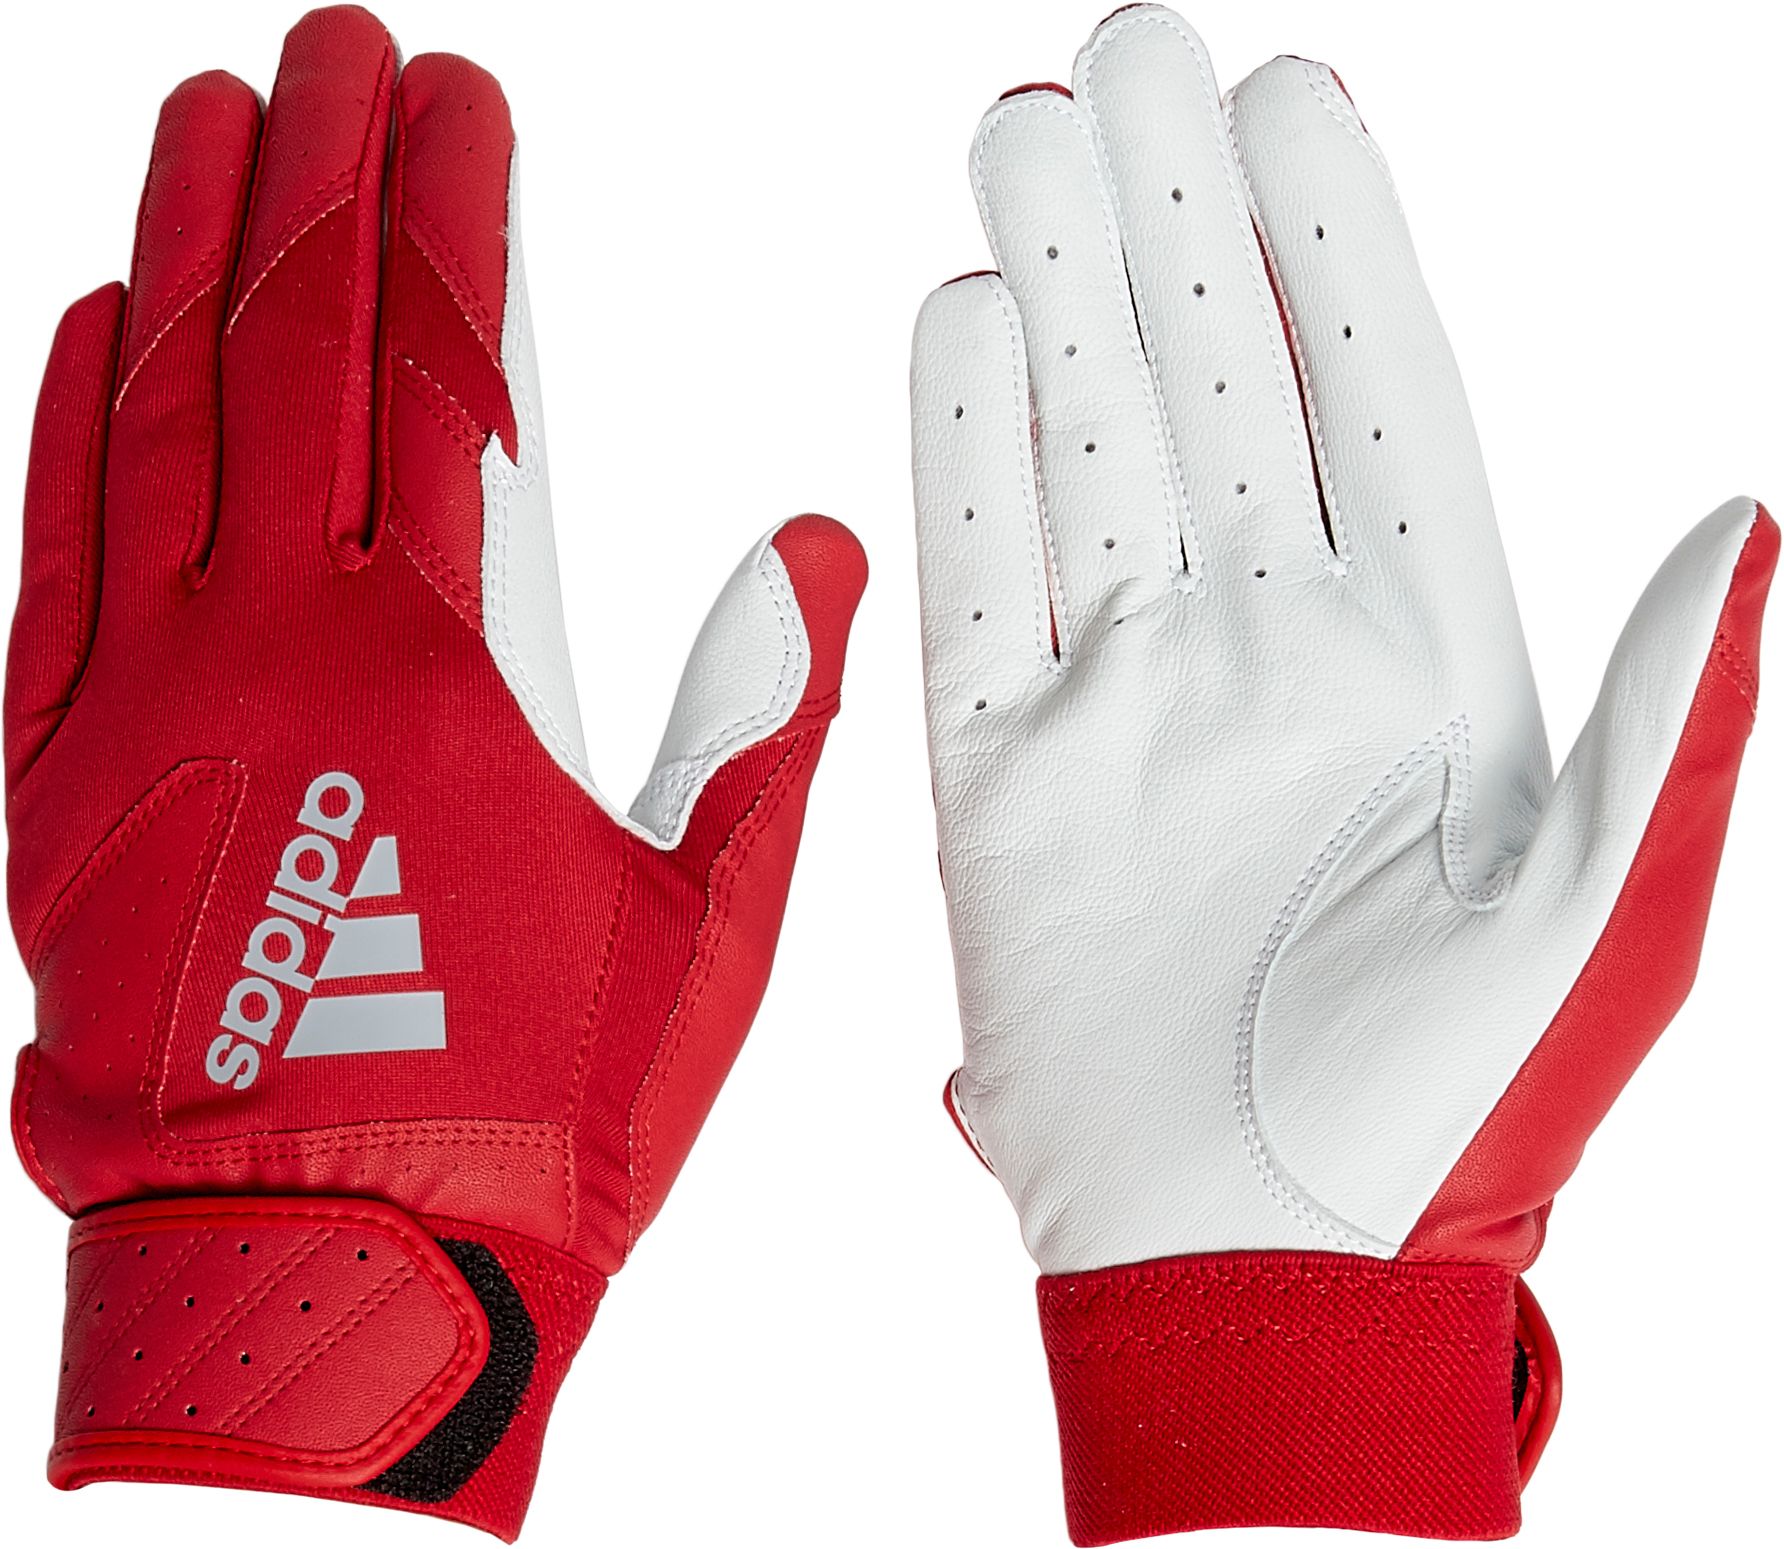 custom adidas batting gloves